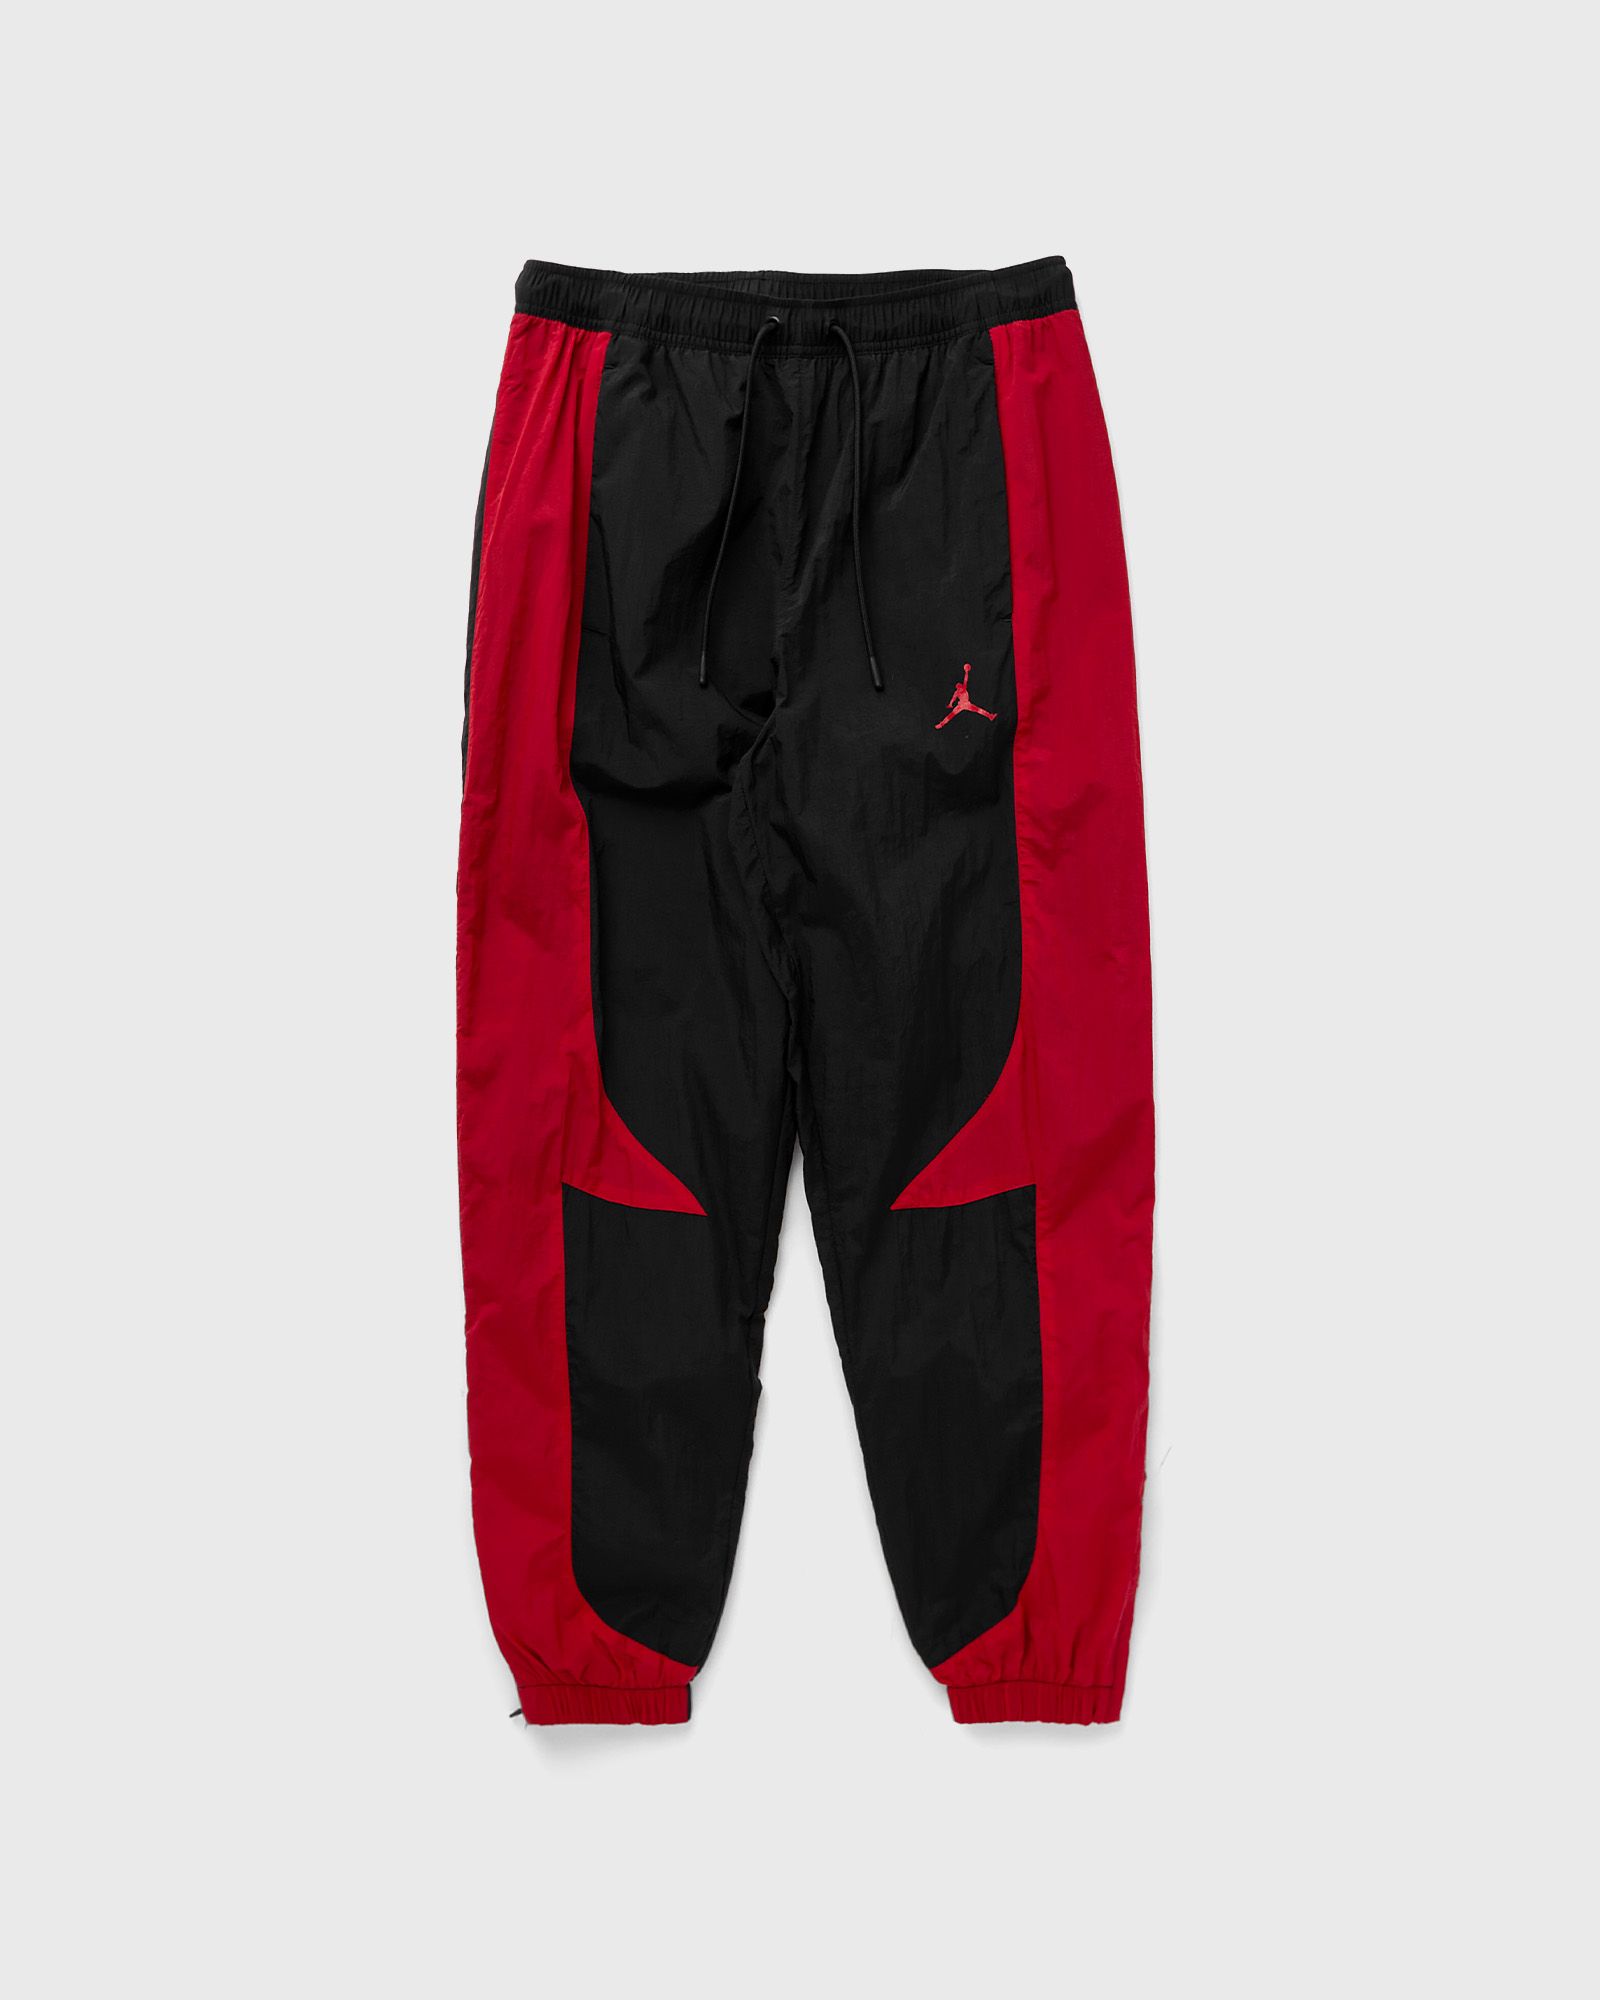 Jordan - sport jam men's warm up pants men sweatpants black|red in größe:xl